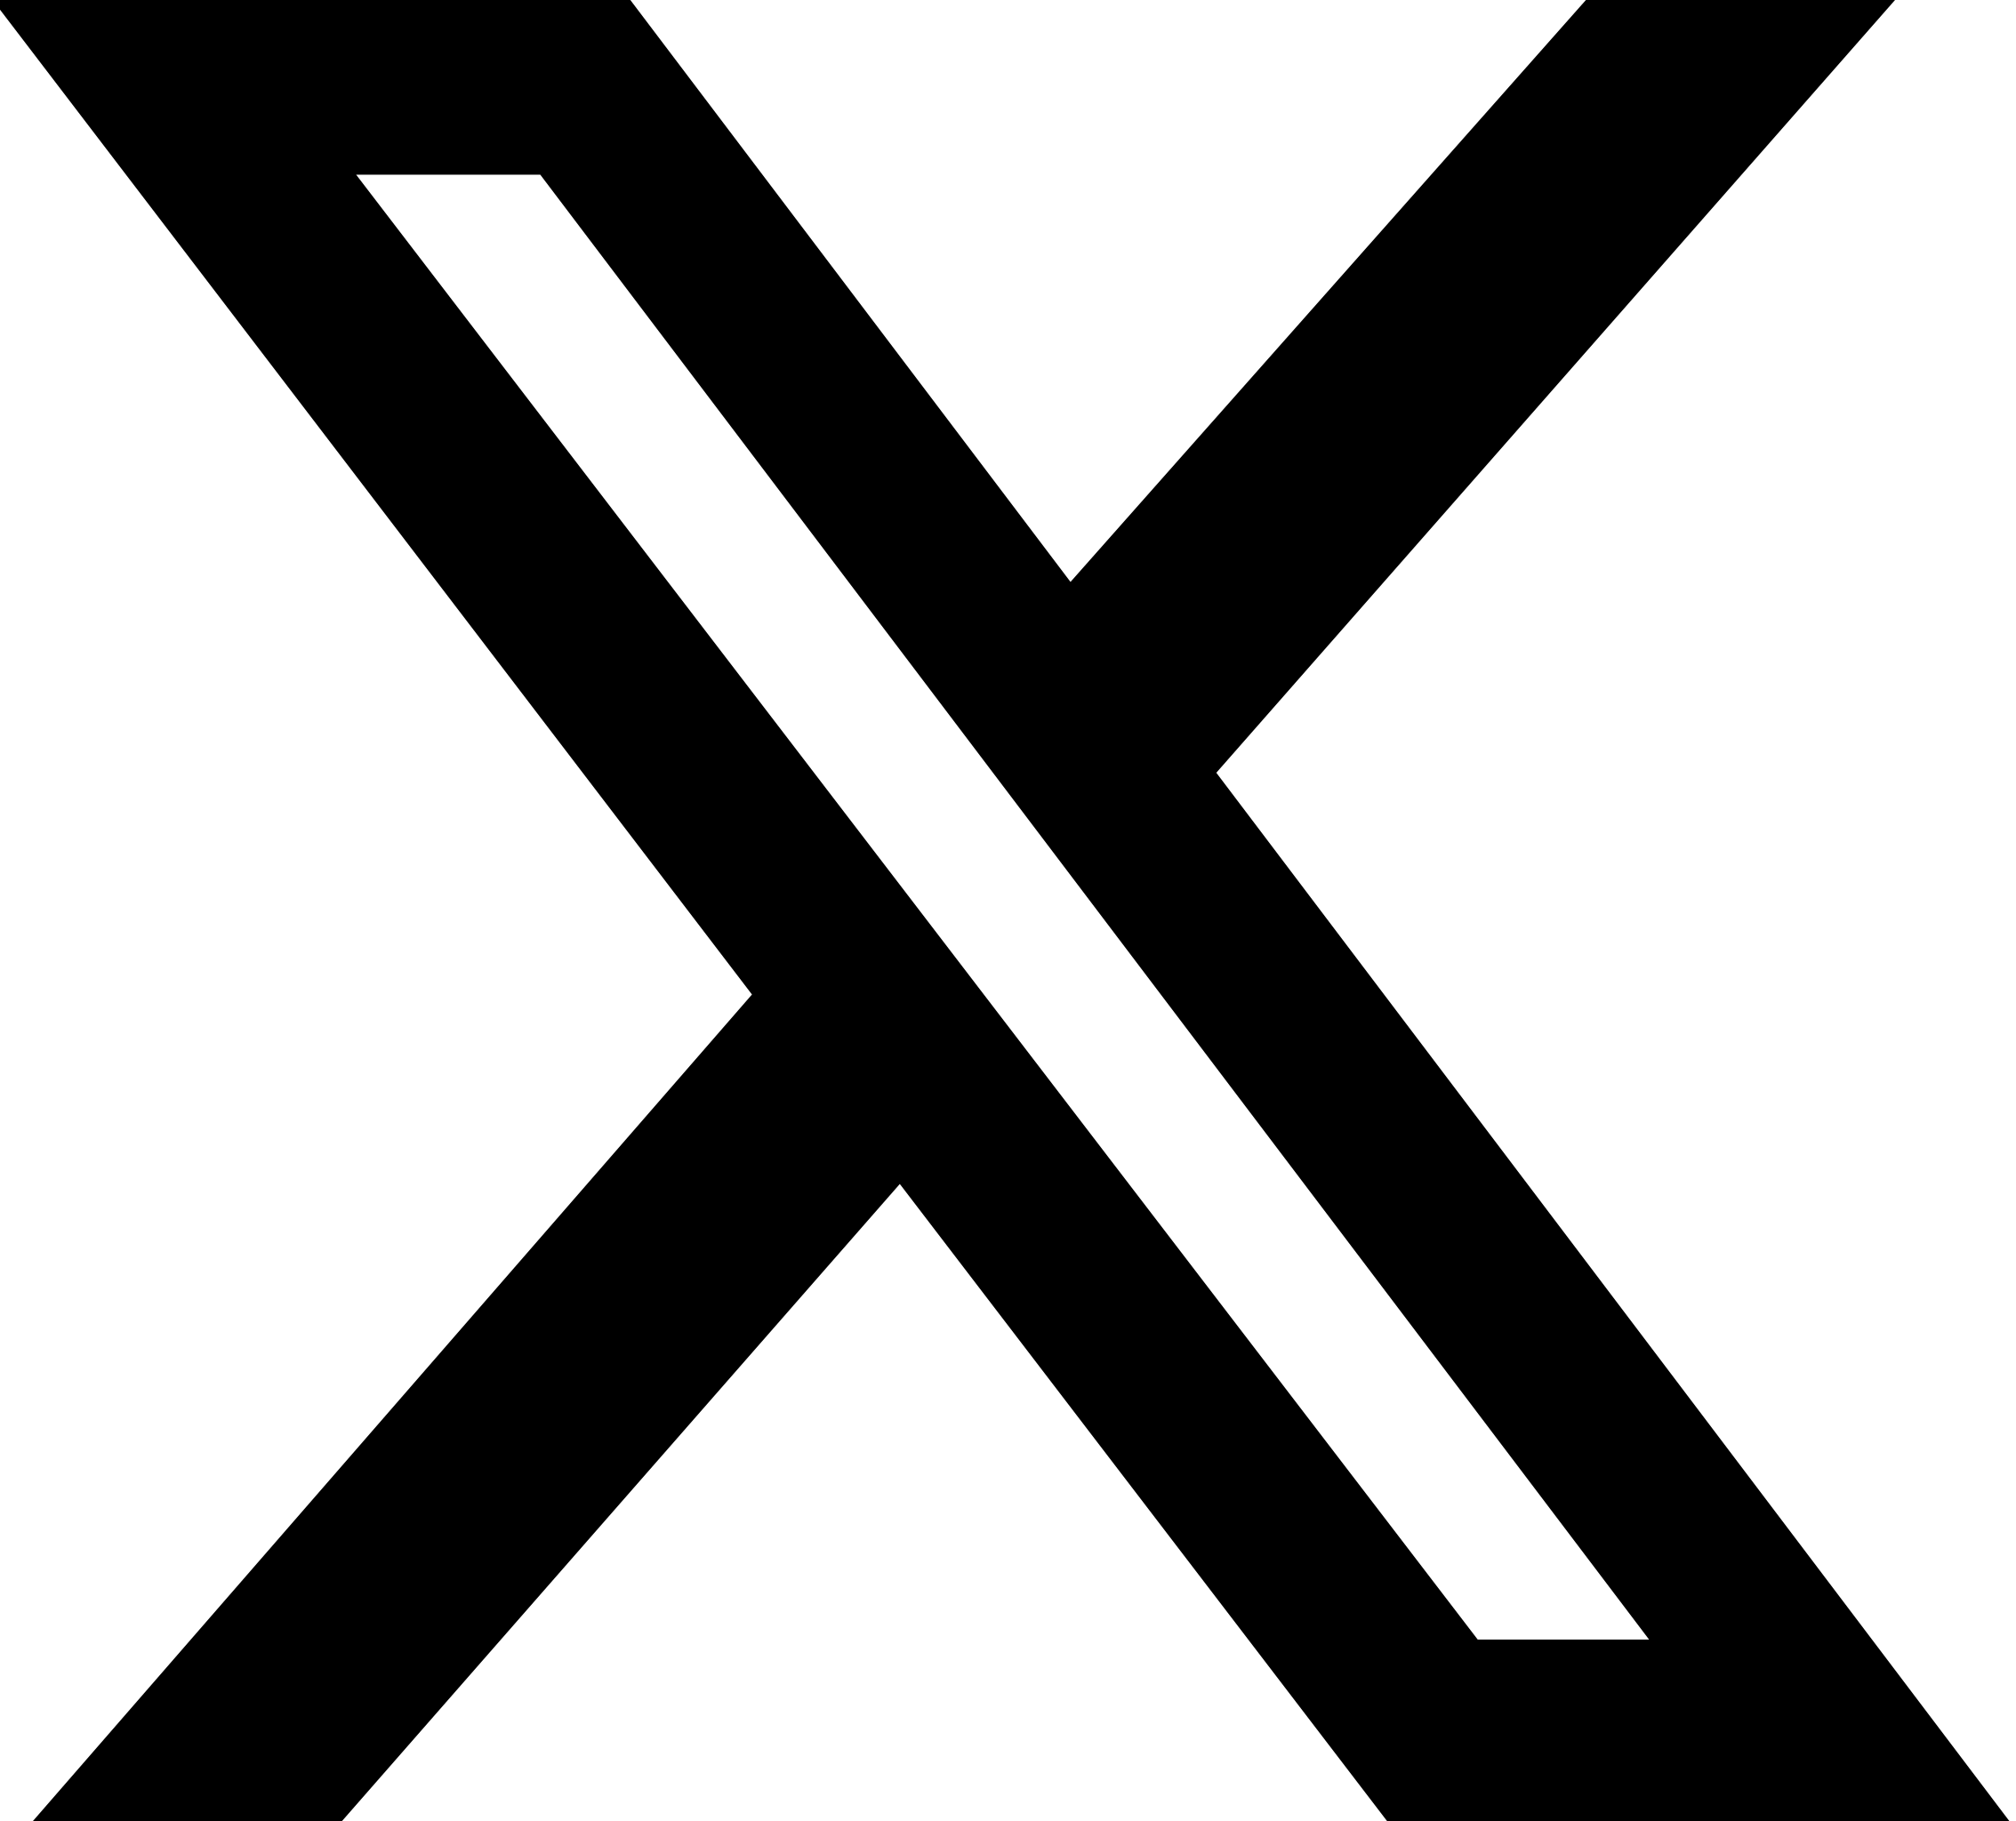 File:Xvideos logo (2023).svg - Wikipedia